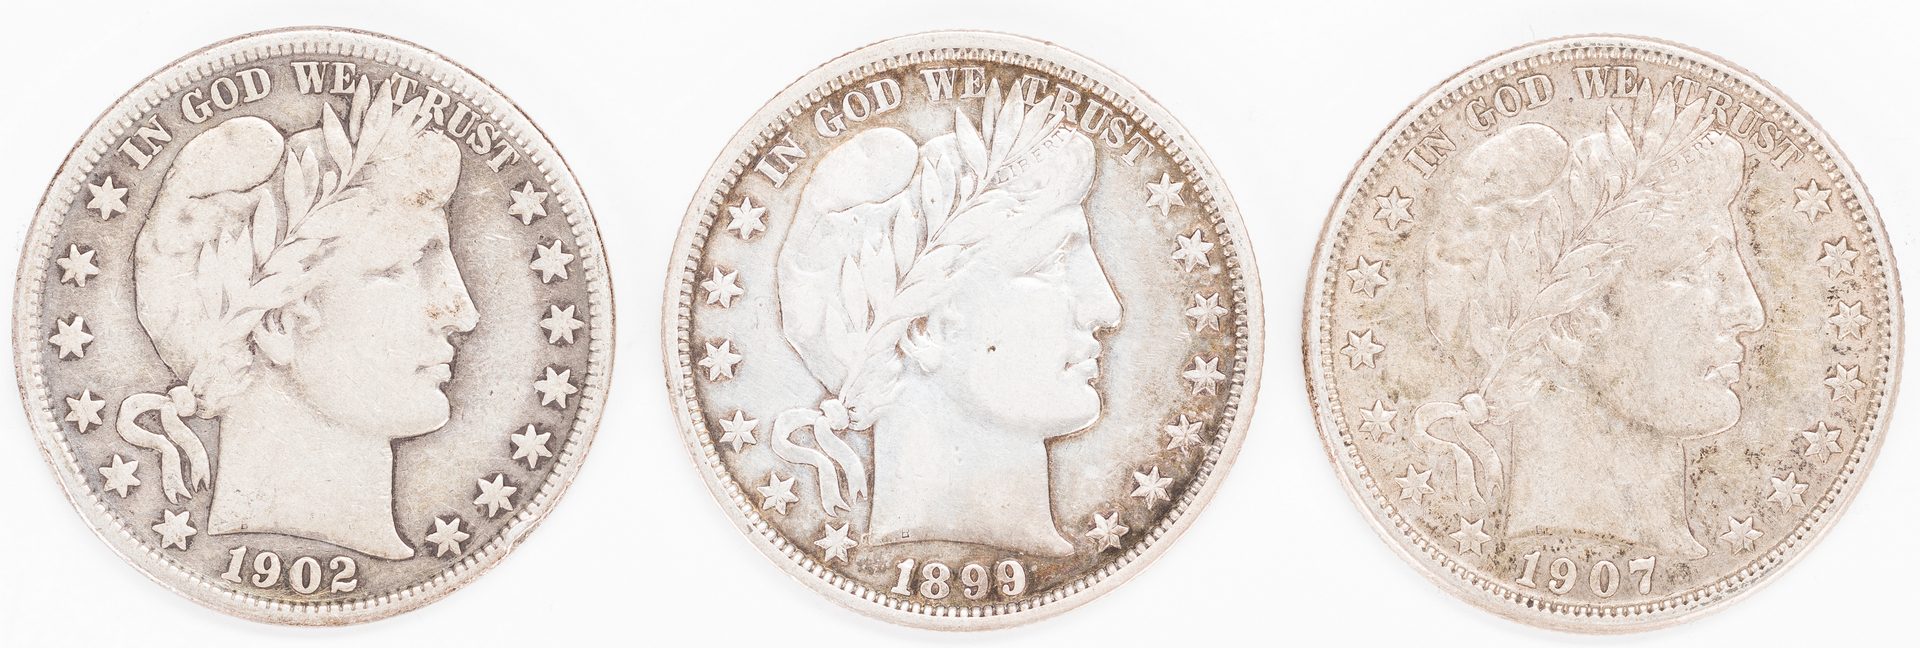 Lot 894: 68 U.S. Silver Half Dollars (1876-1947)